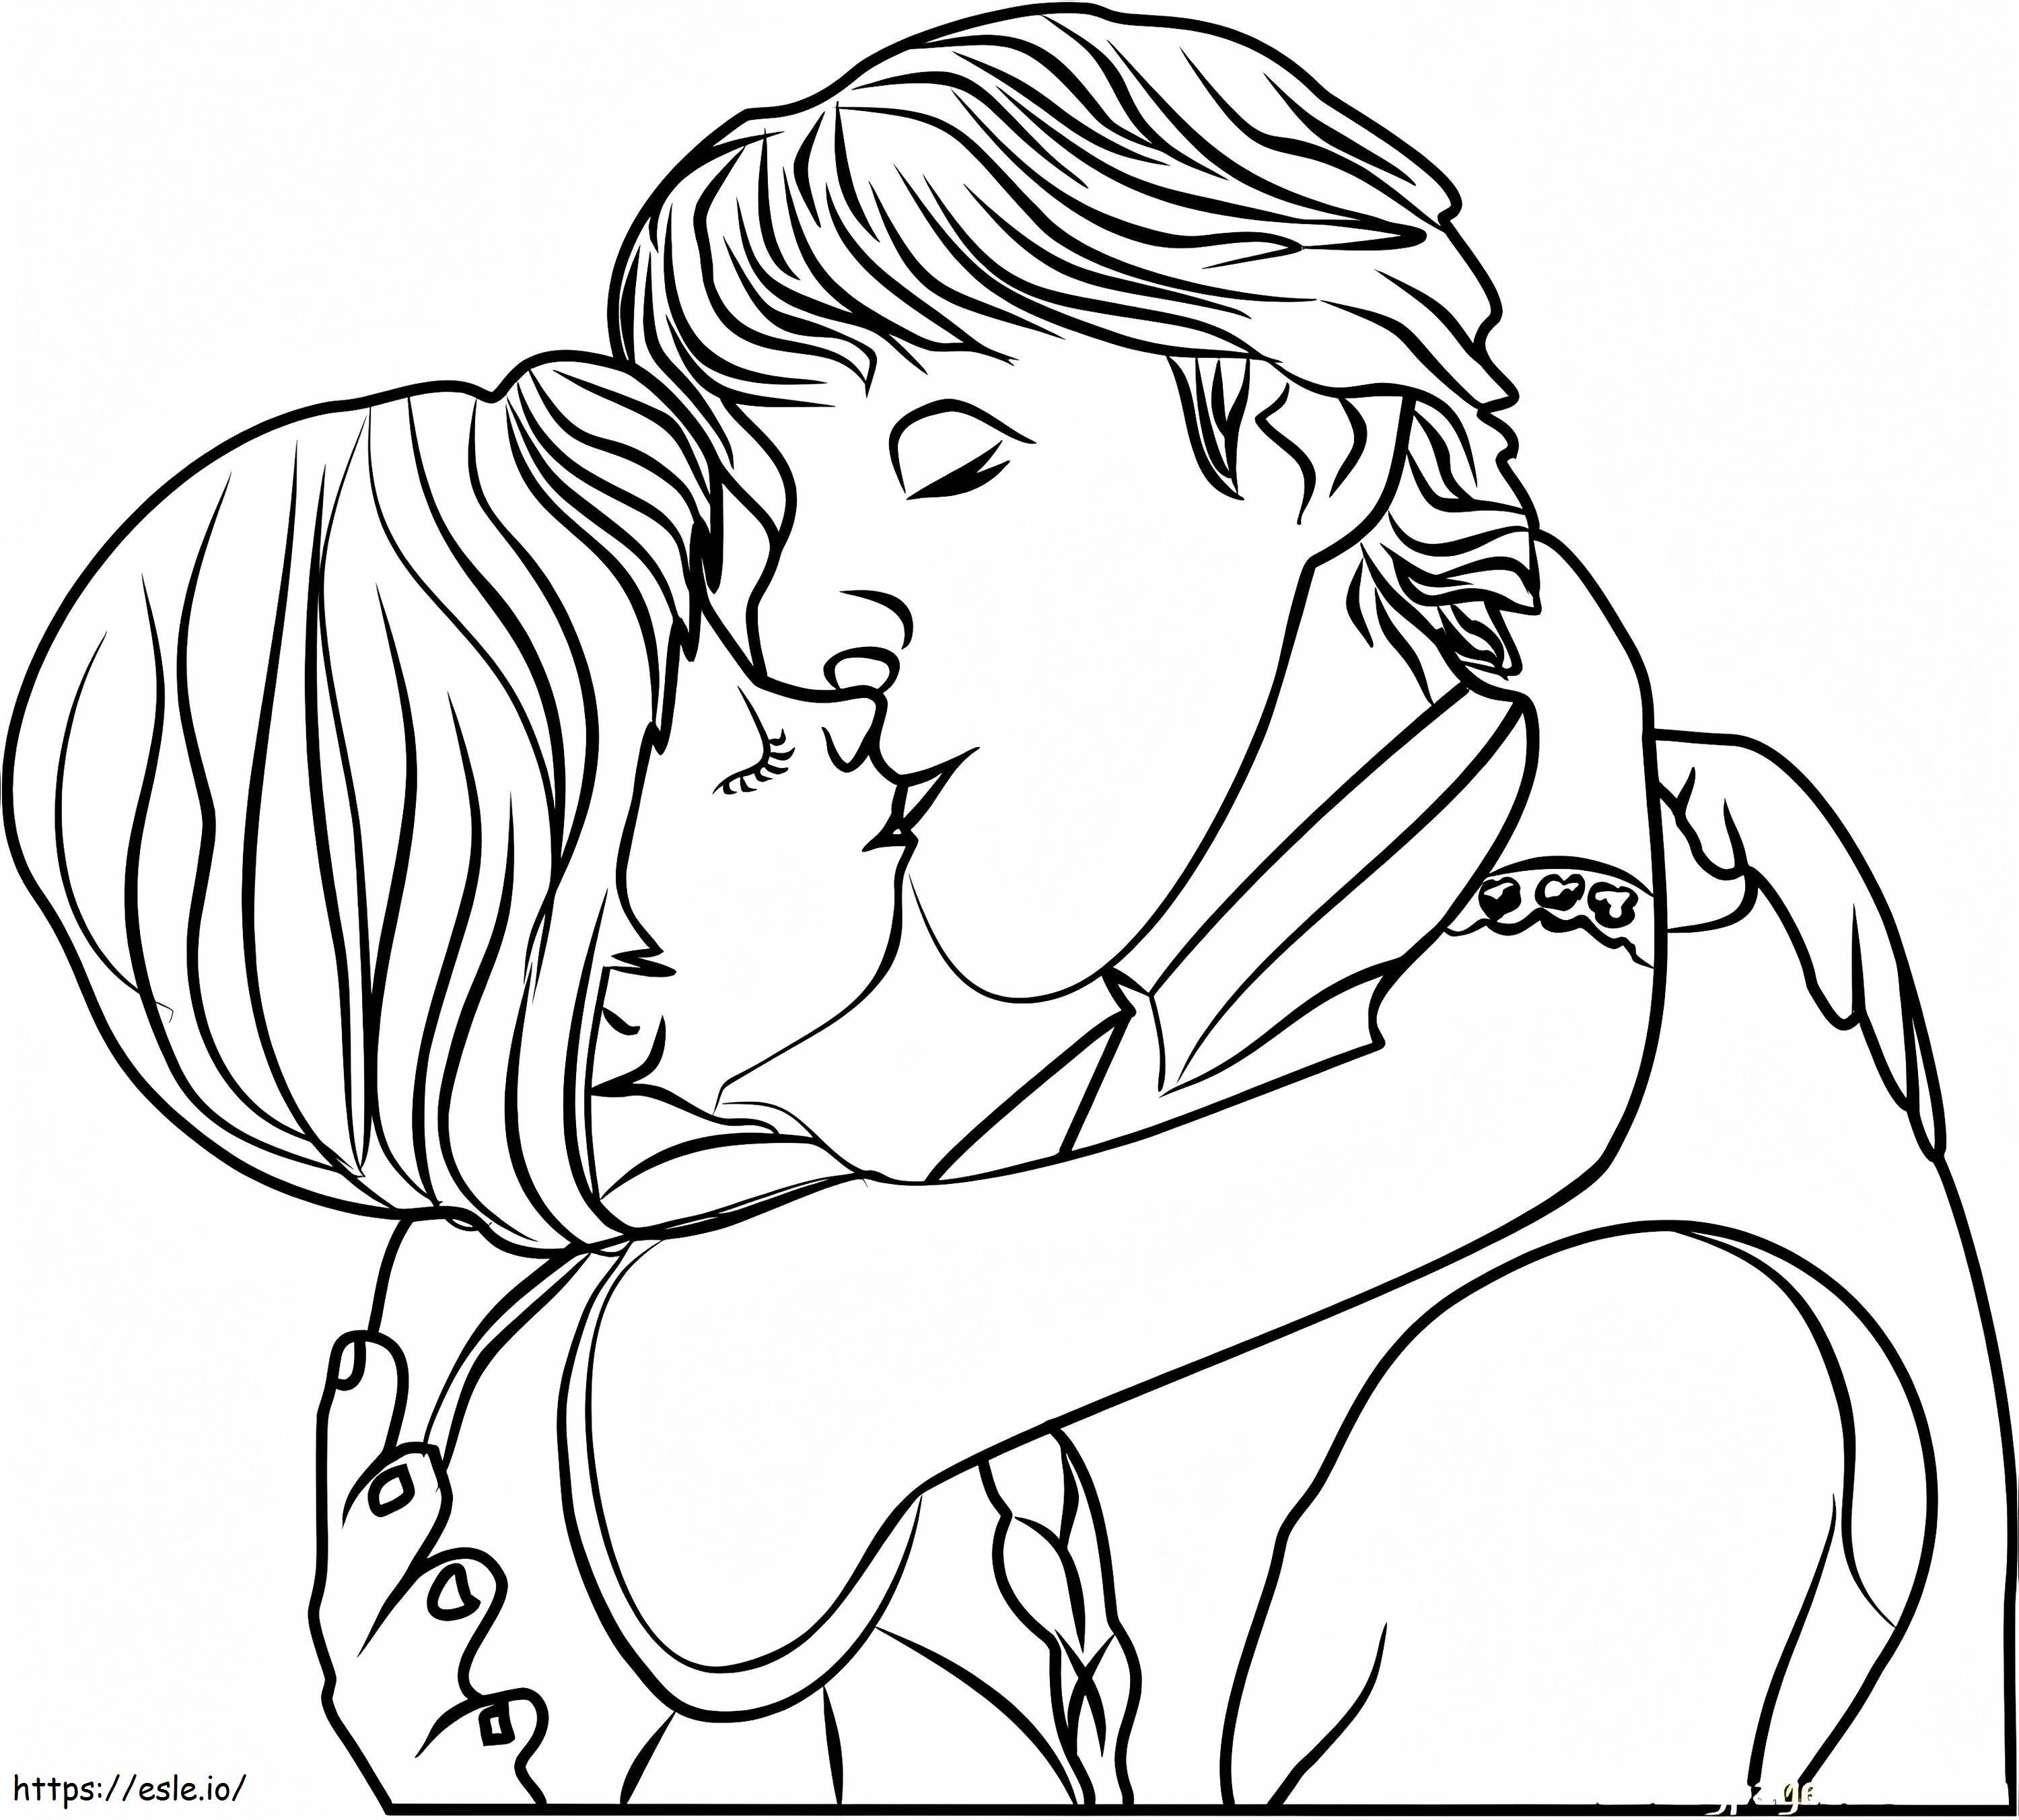 Kristoff ve Anna'nın Öpücüğü boyama